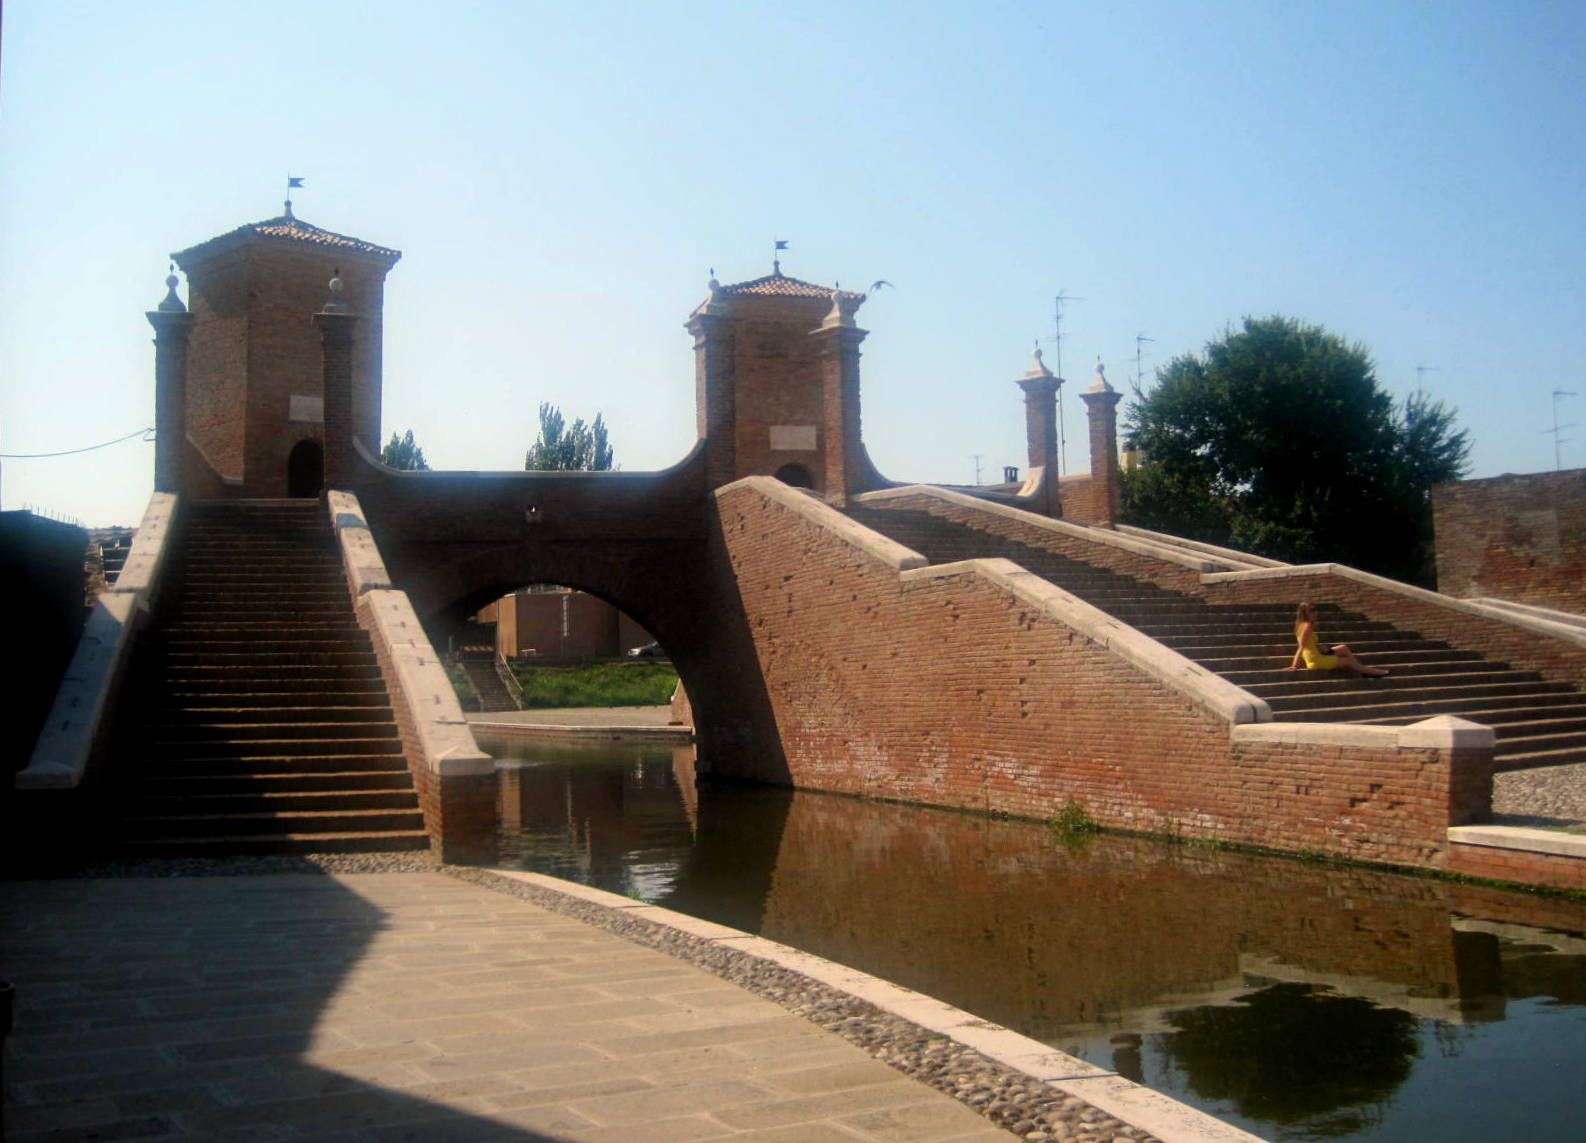 photo: https://upload.wikimedia.org/wikipedia/commons/e/eb/Ponte_dei_Trepponti_a_Comacchio_04.jpg